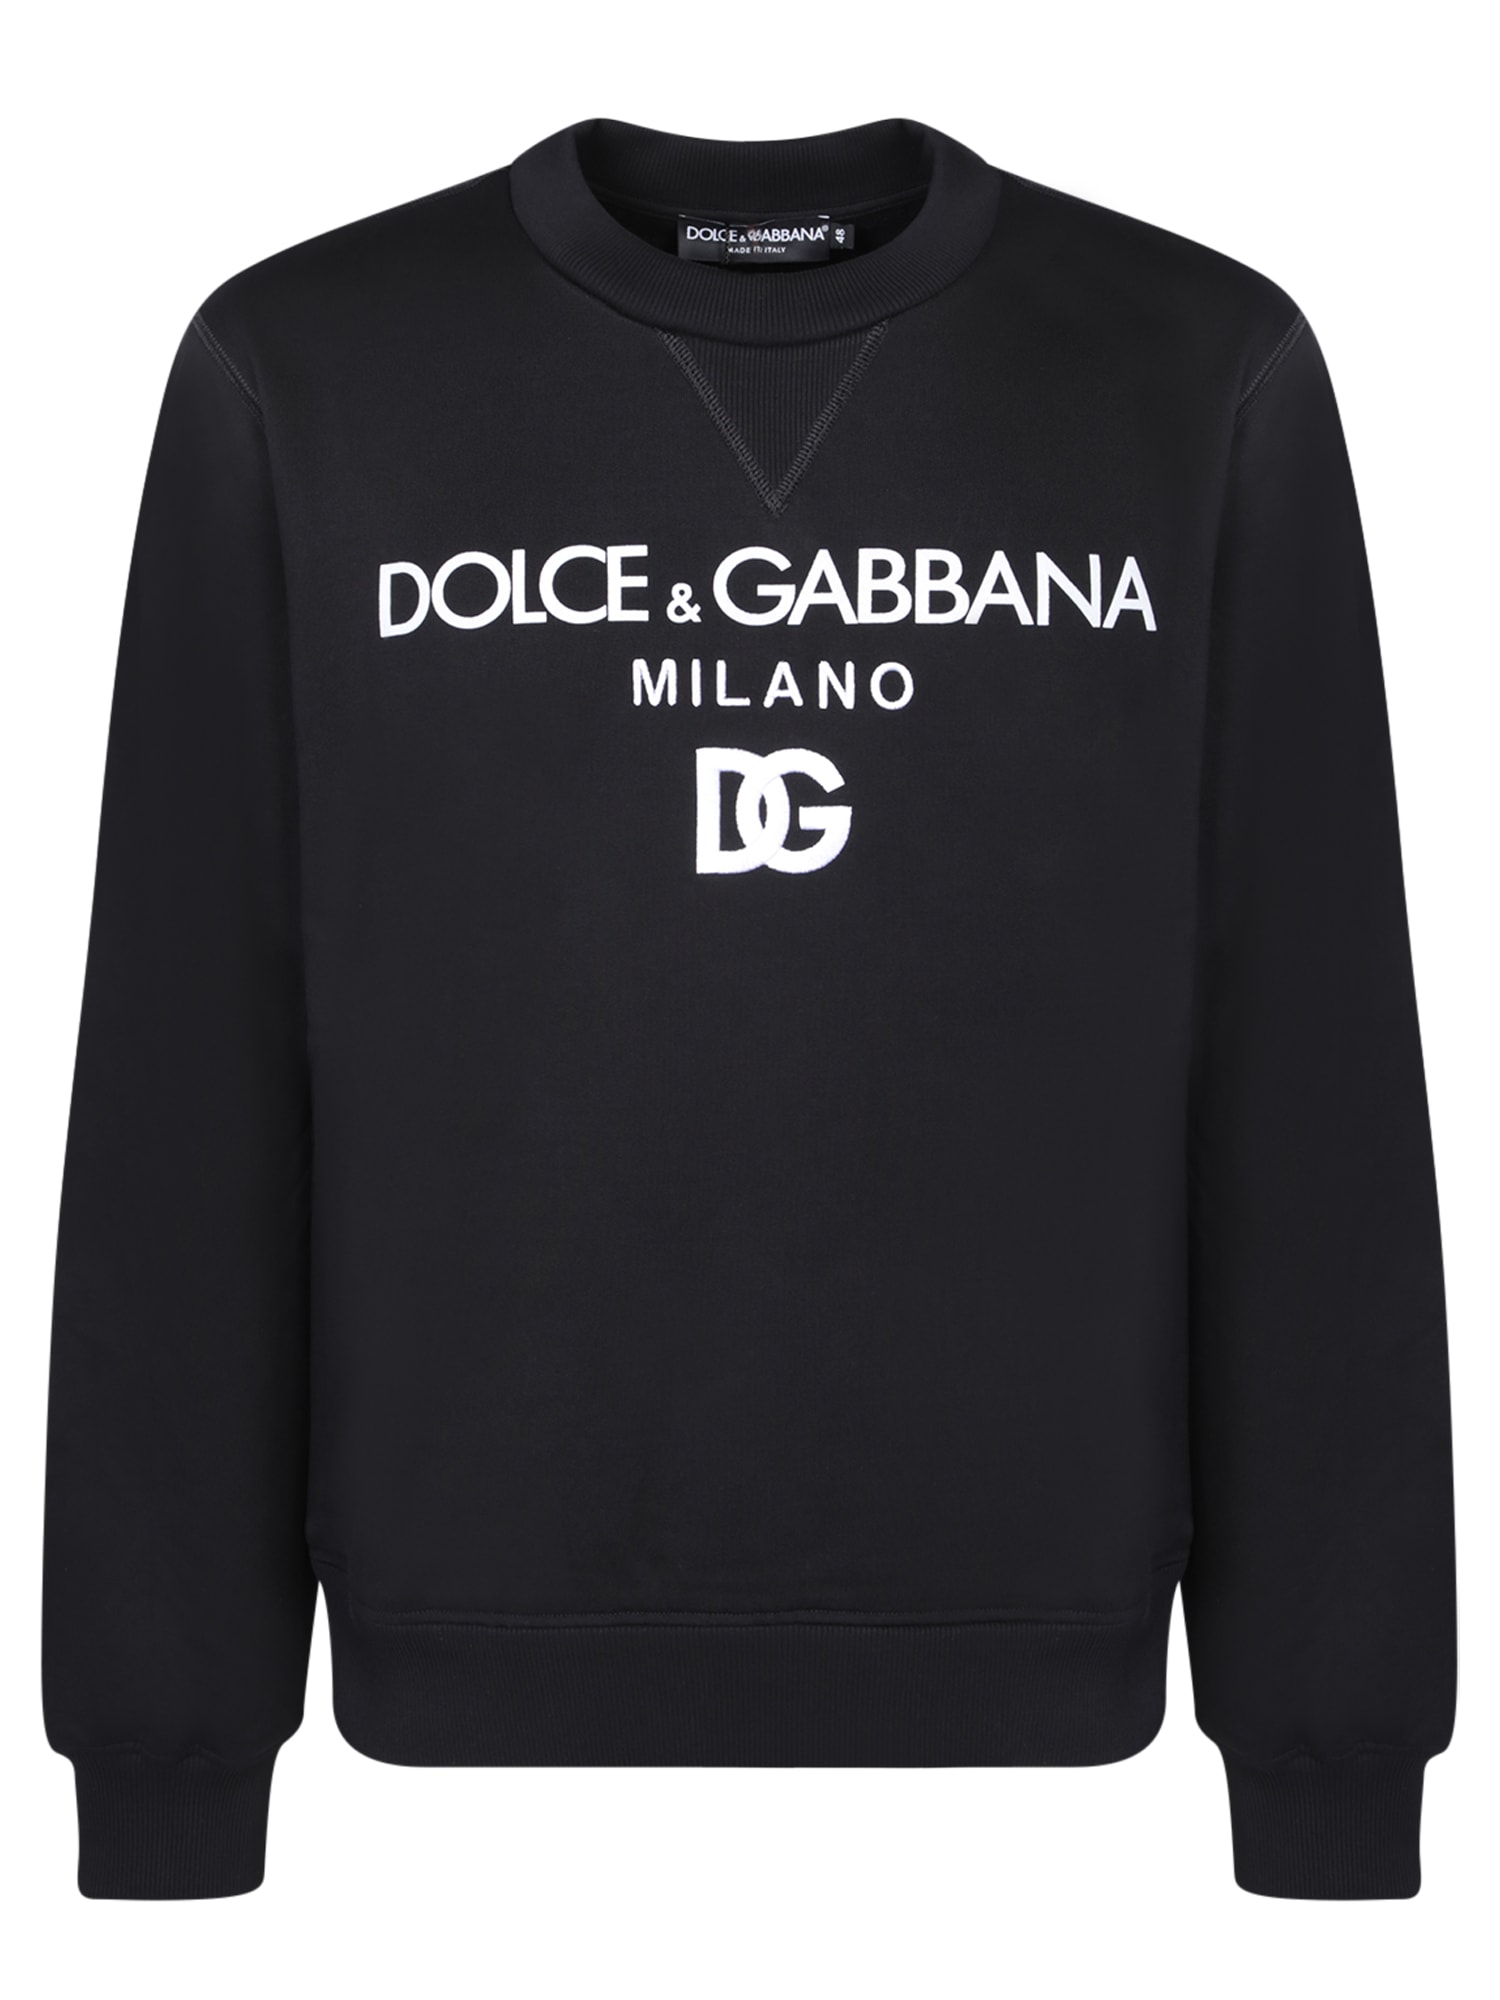 Dolce & Gabbana Logo Black Sweatshirt